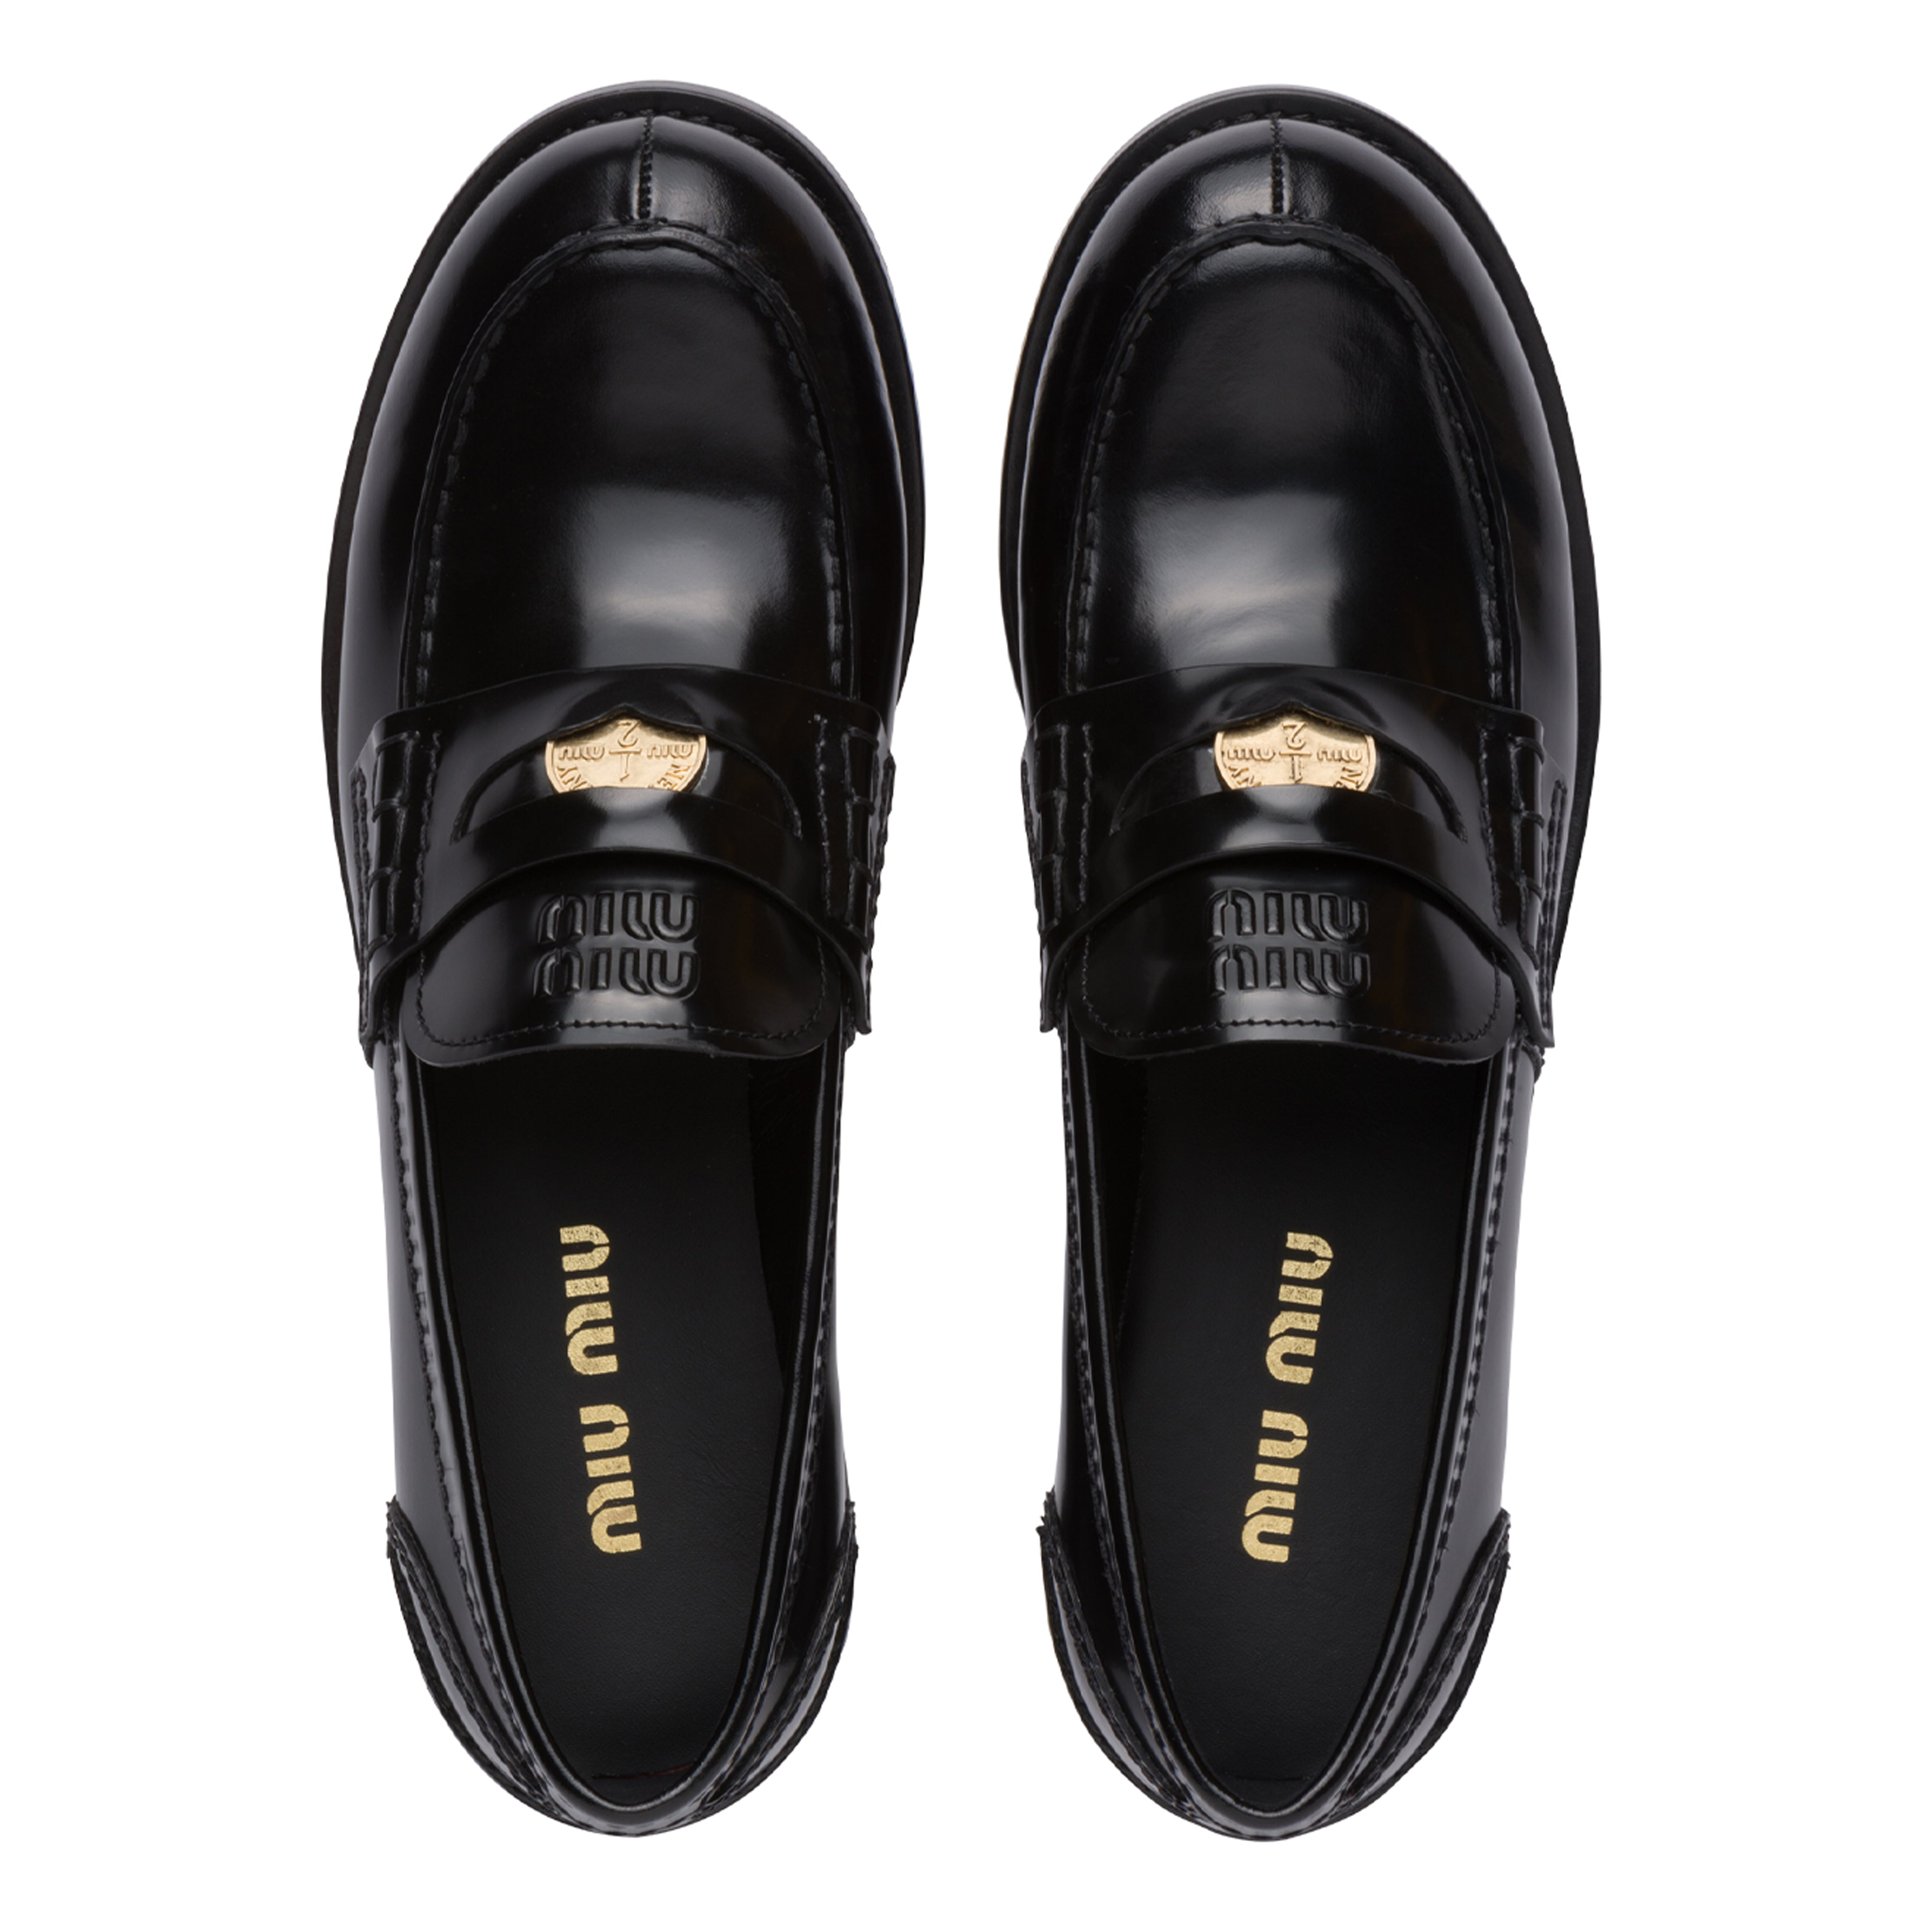 Miu Miu - Women's Loafers - (Black)